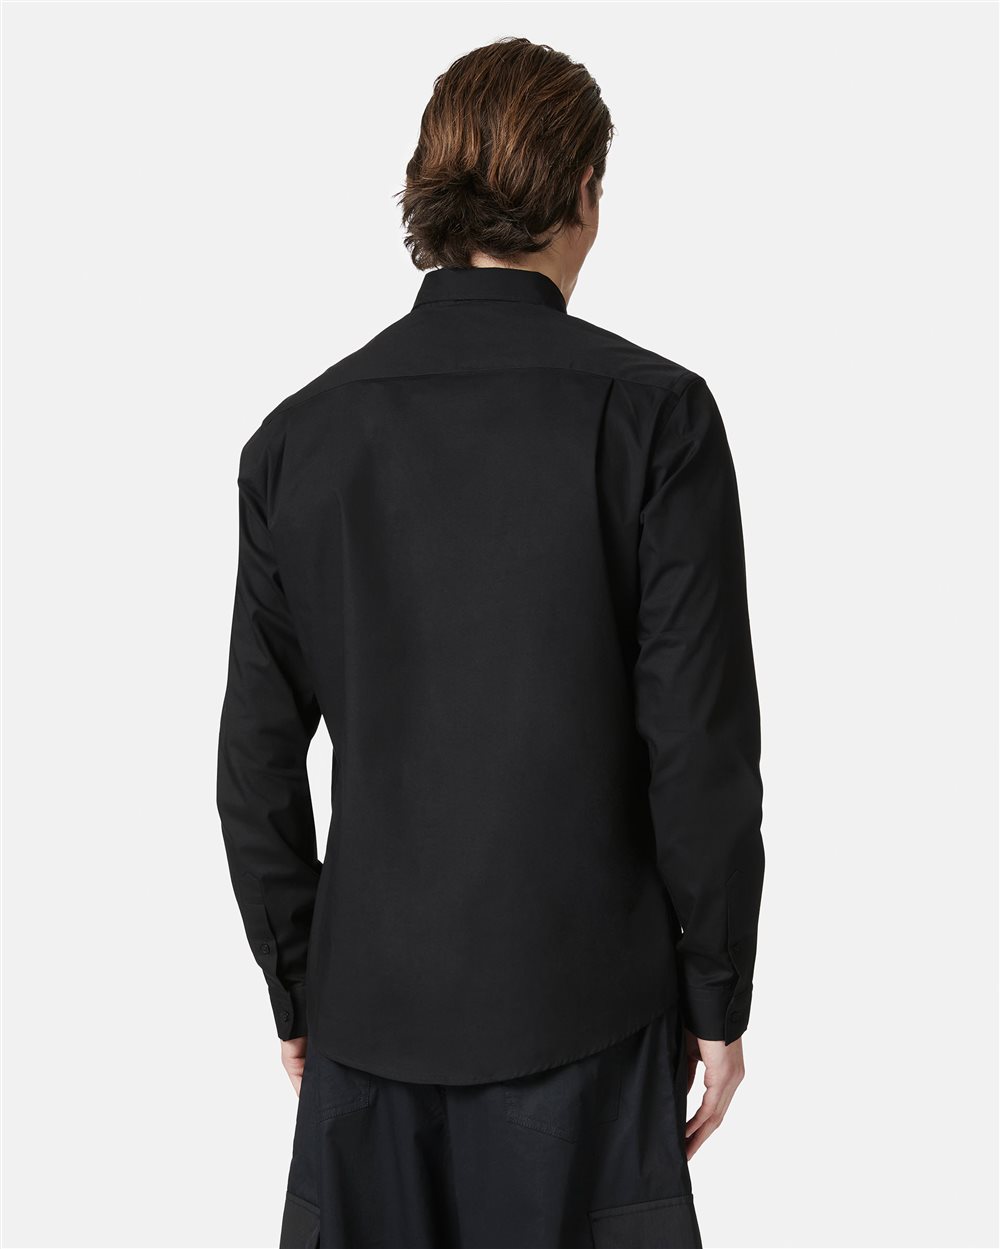 Black shirt with logo - Iceberg - Official Website